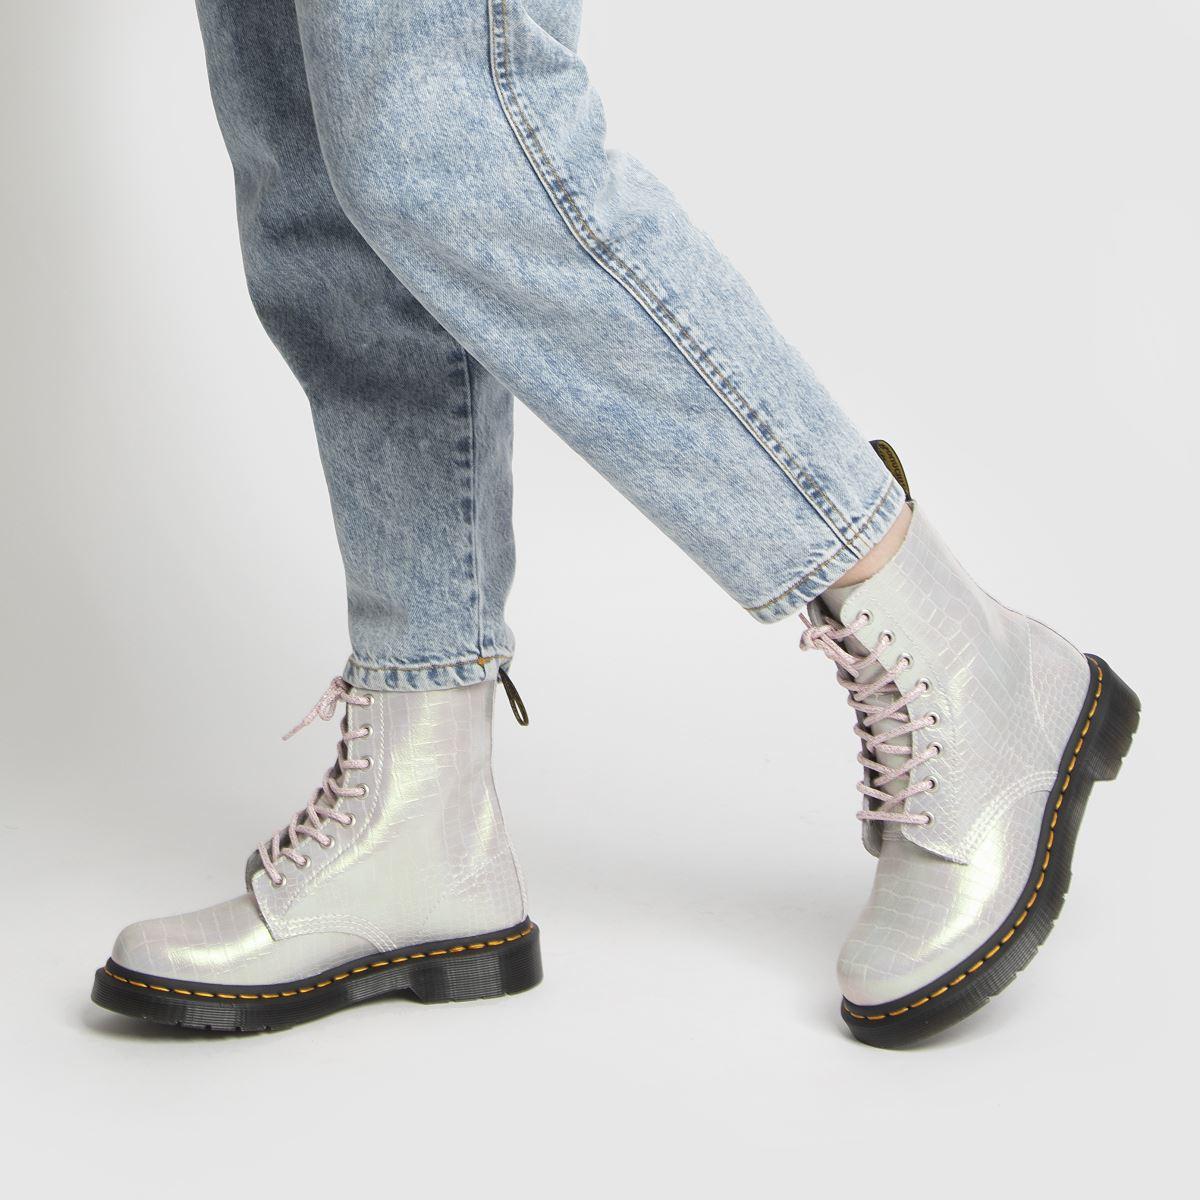 dr martens 1460 iridescent croc boots